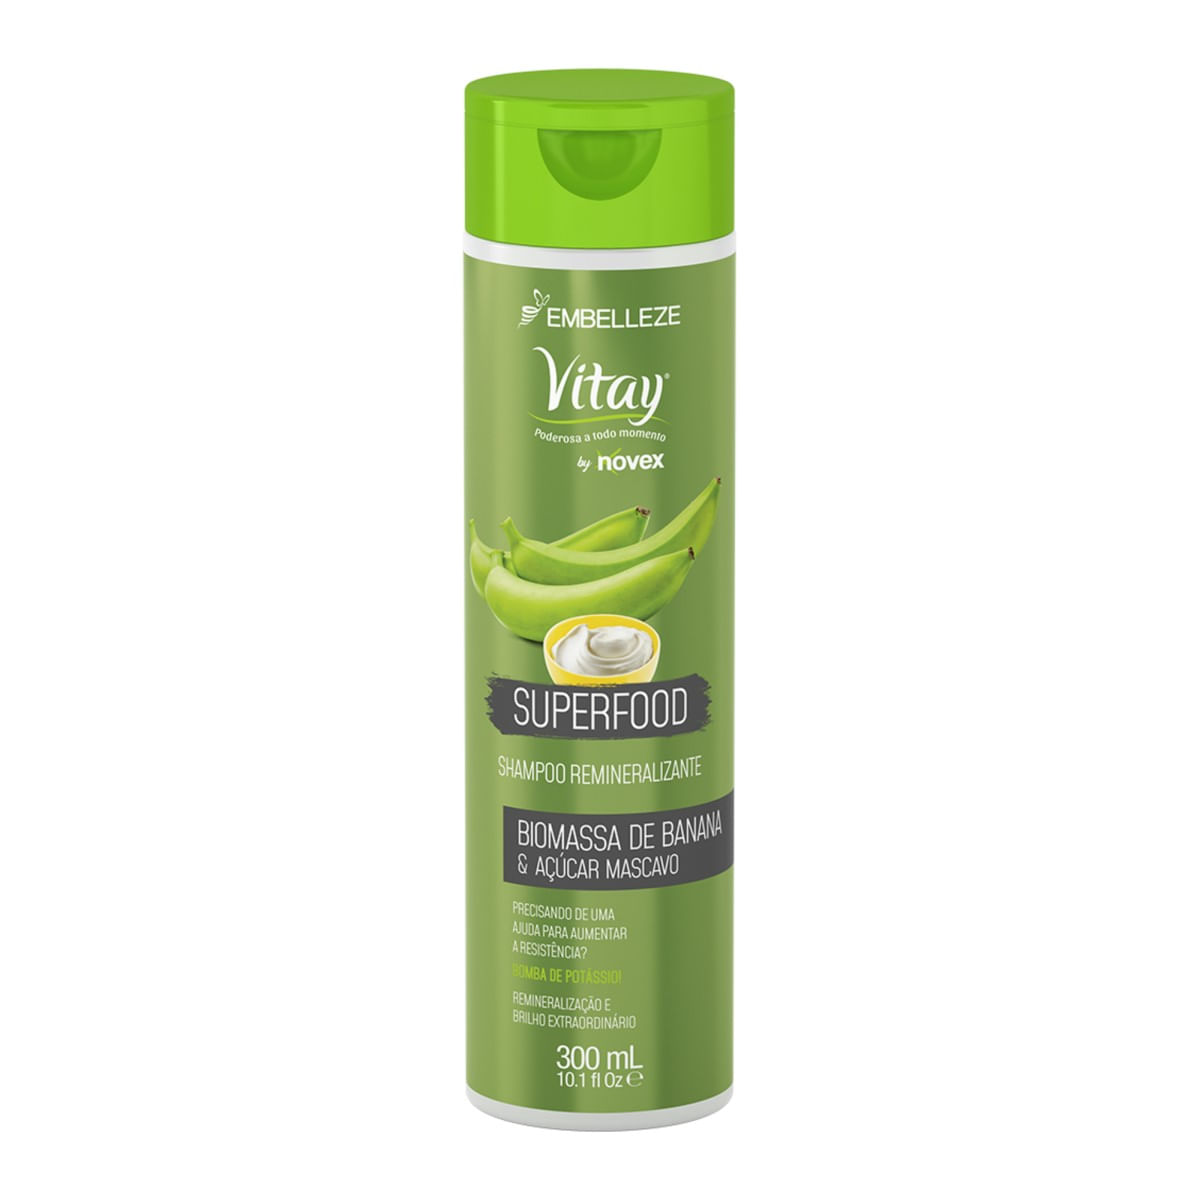 shampoo-embelleze-vitay-superfood-biomassa-de-banana-&-acucar-mascavo-300-ml-1.jpg